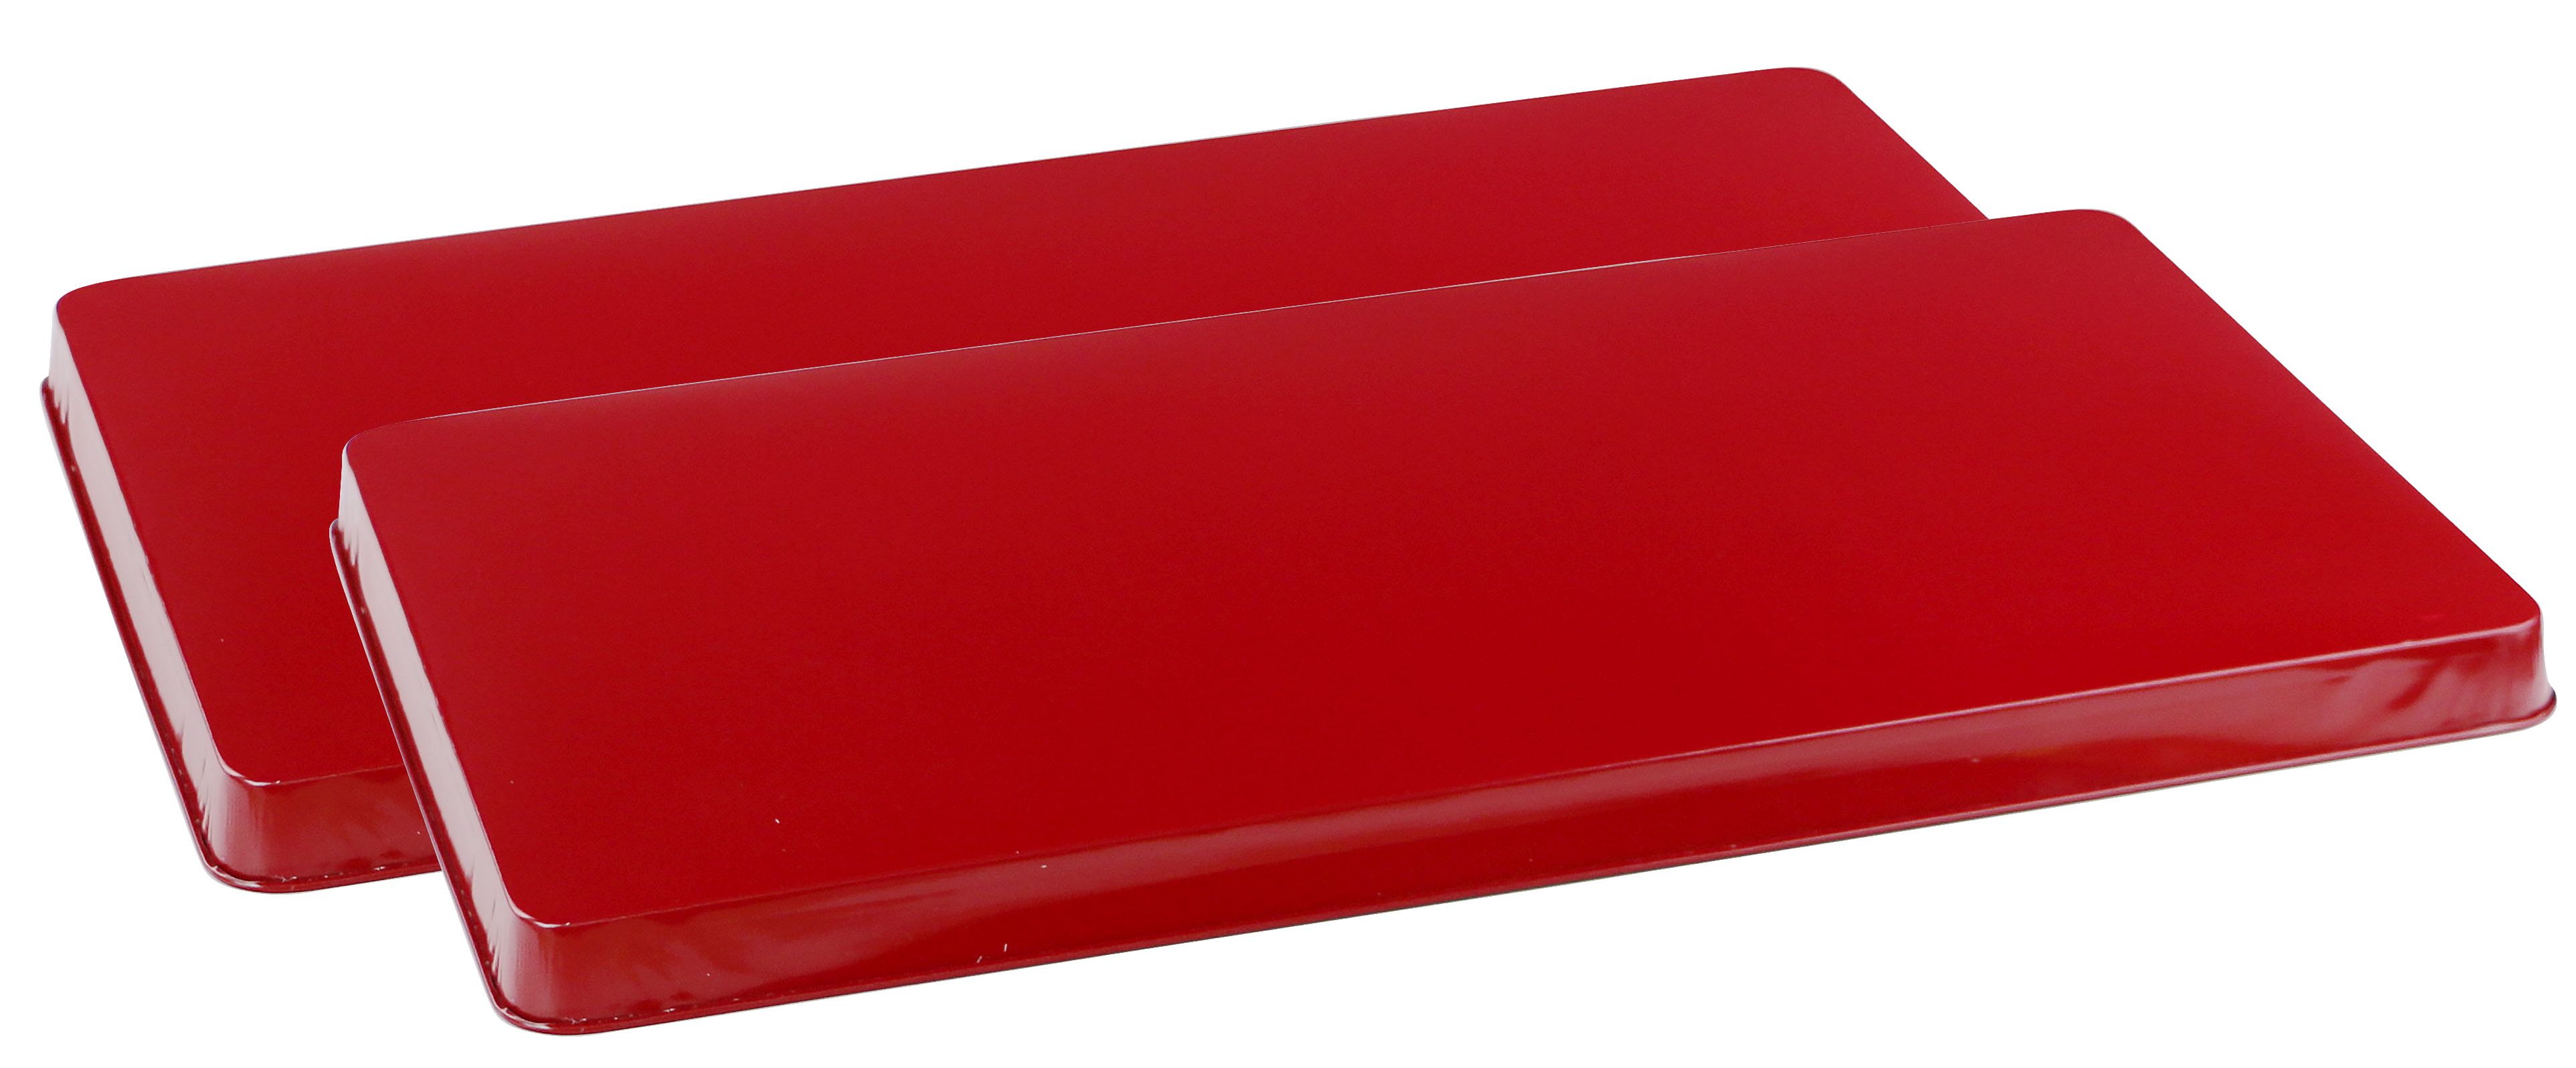 Picture of Reston Lloyd R-600-R Gas Rectangular Tin Burner Cover Set 2  Red 